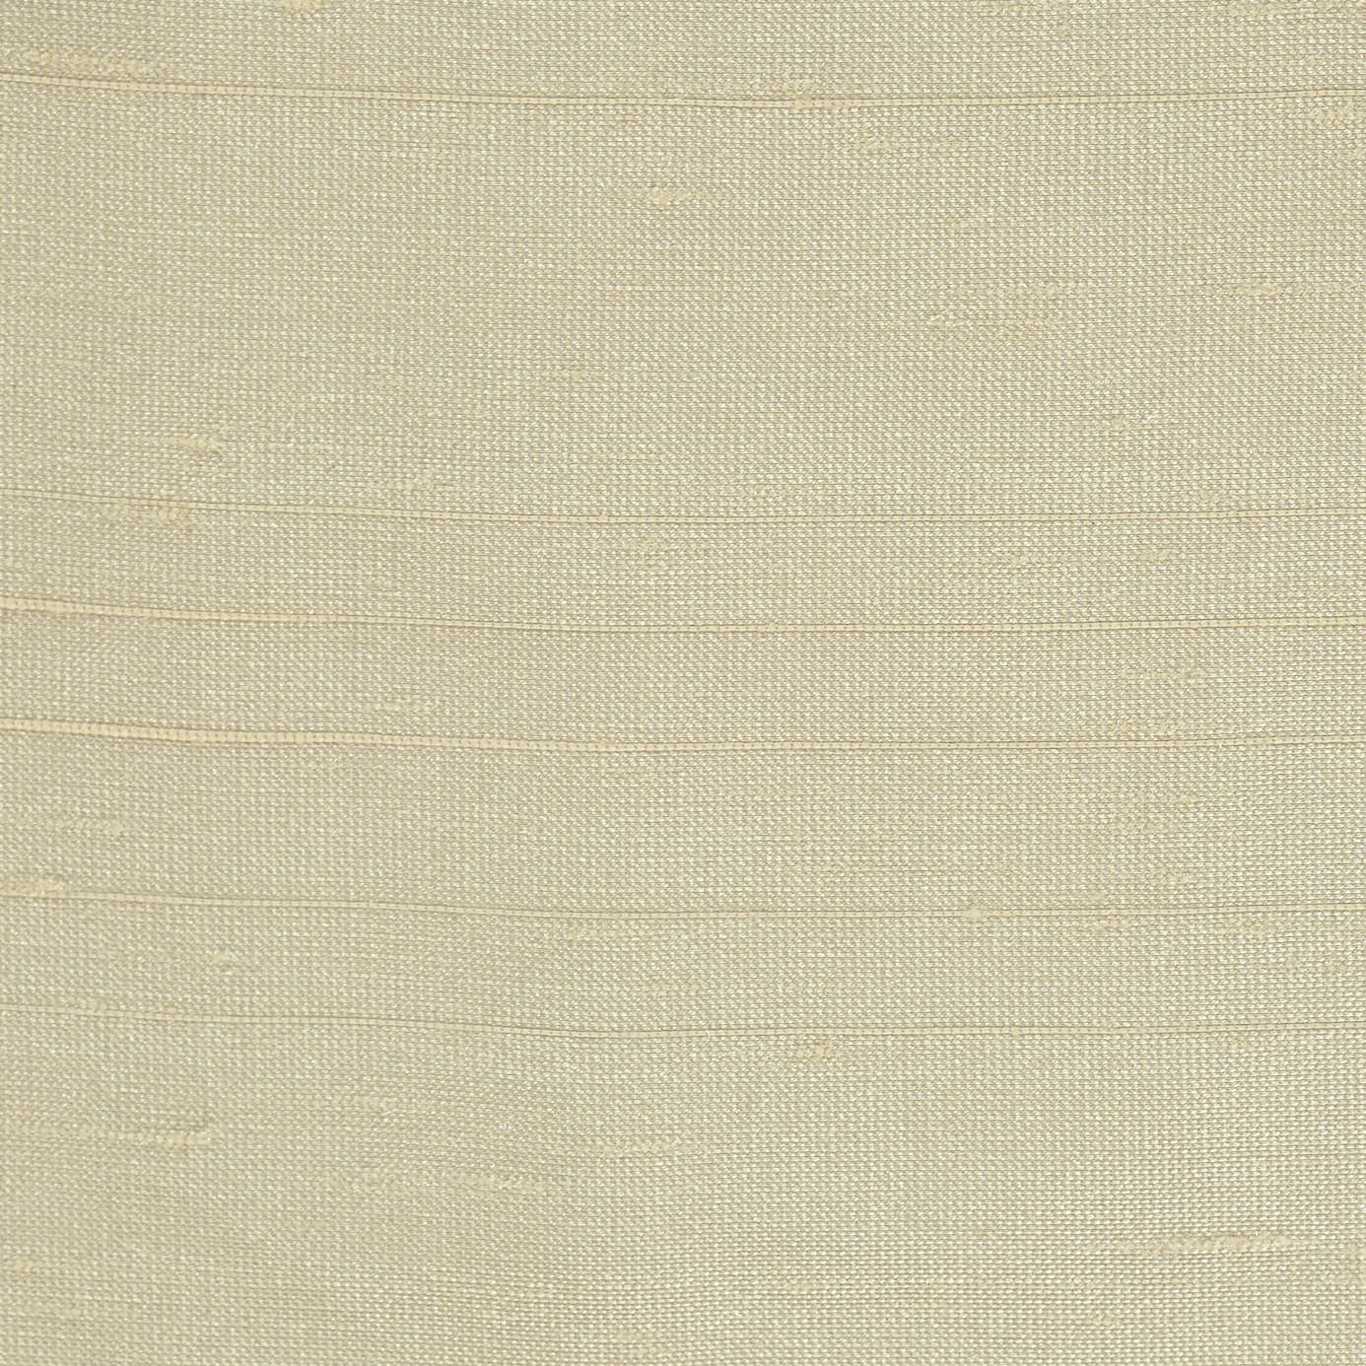 Deflect Fabric by Harlequin - HPOL440657 - Angora